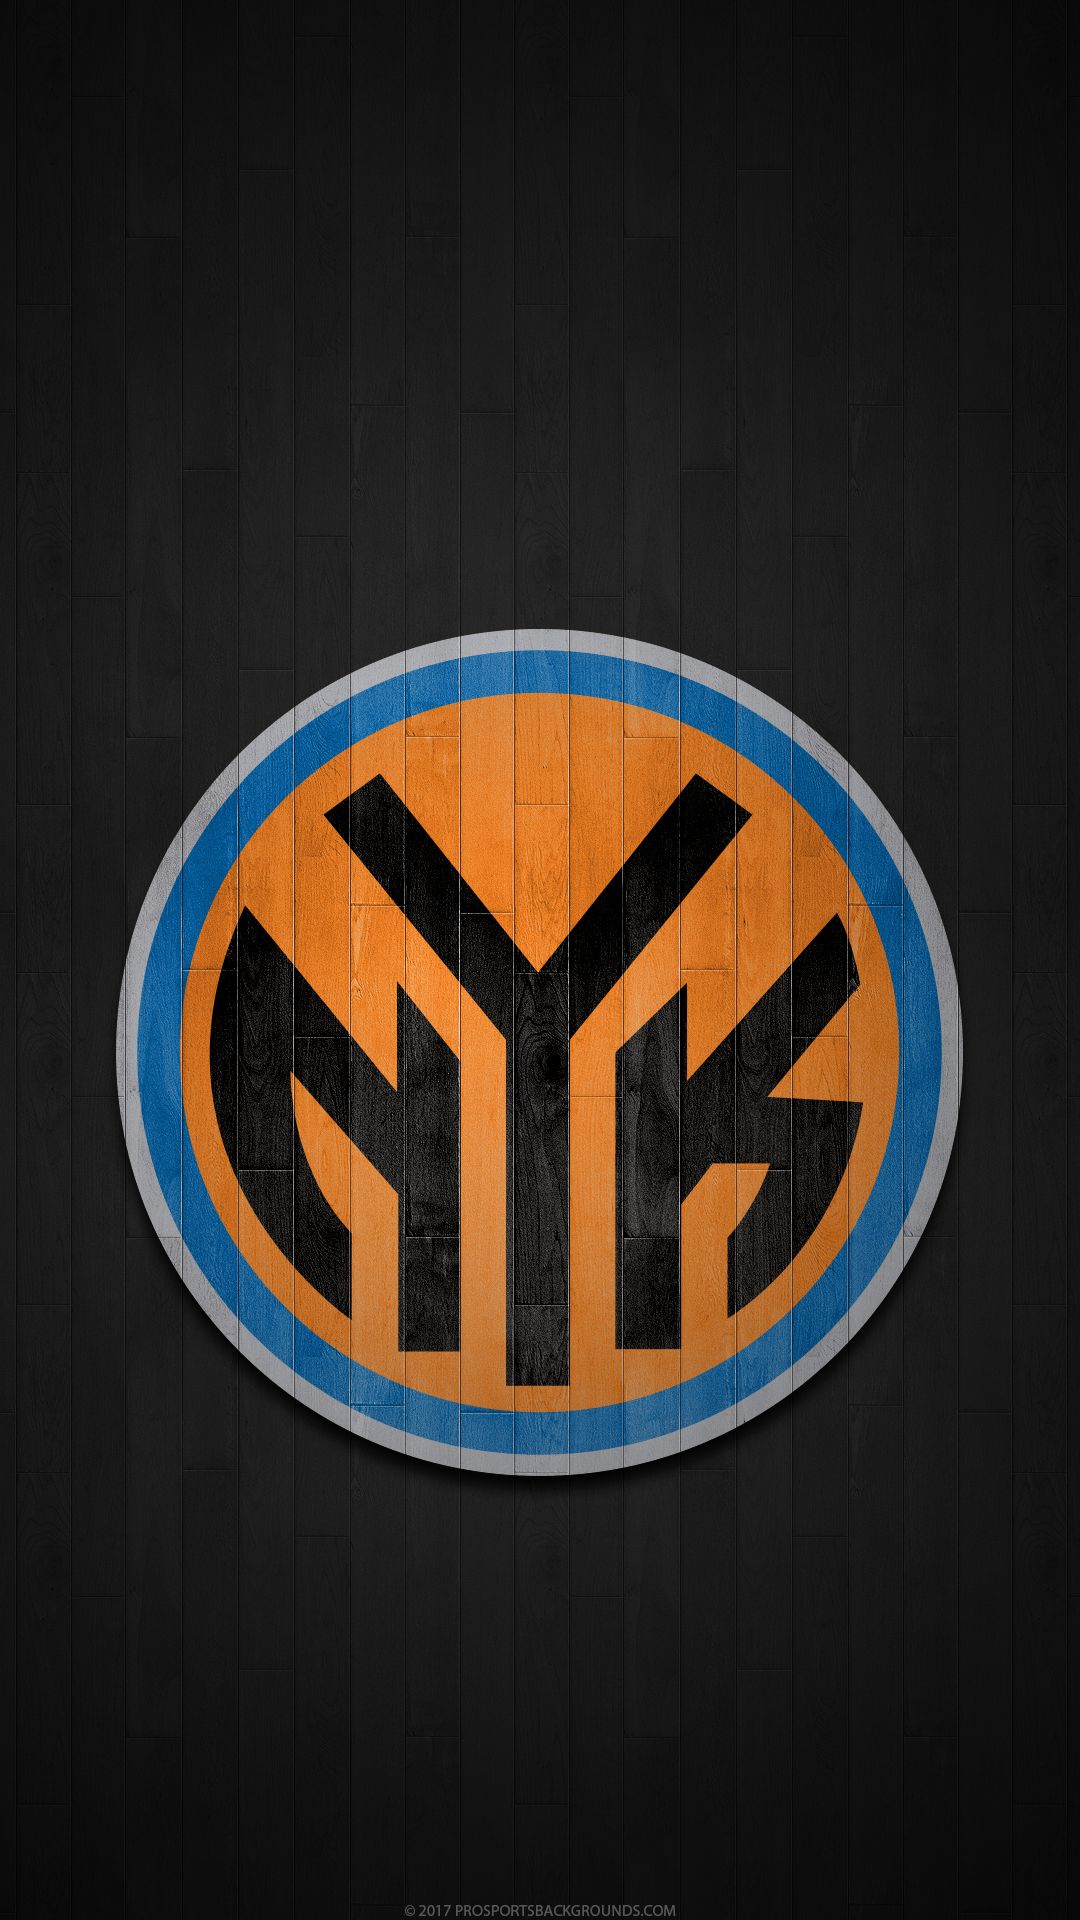 new york knicks, sports, nba, emblem, basketball